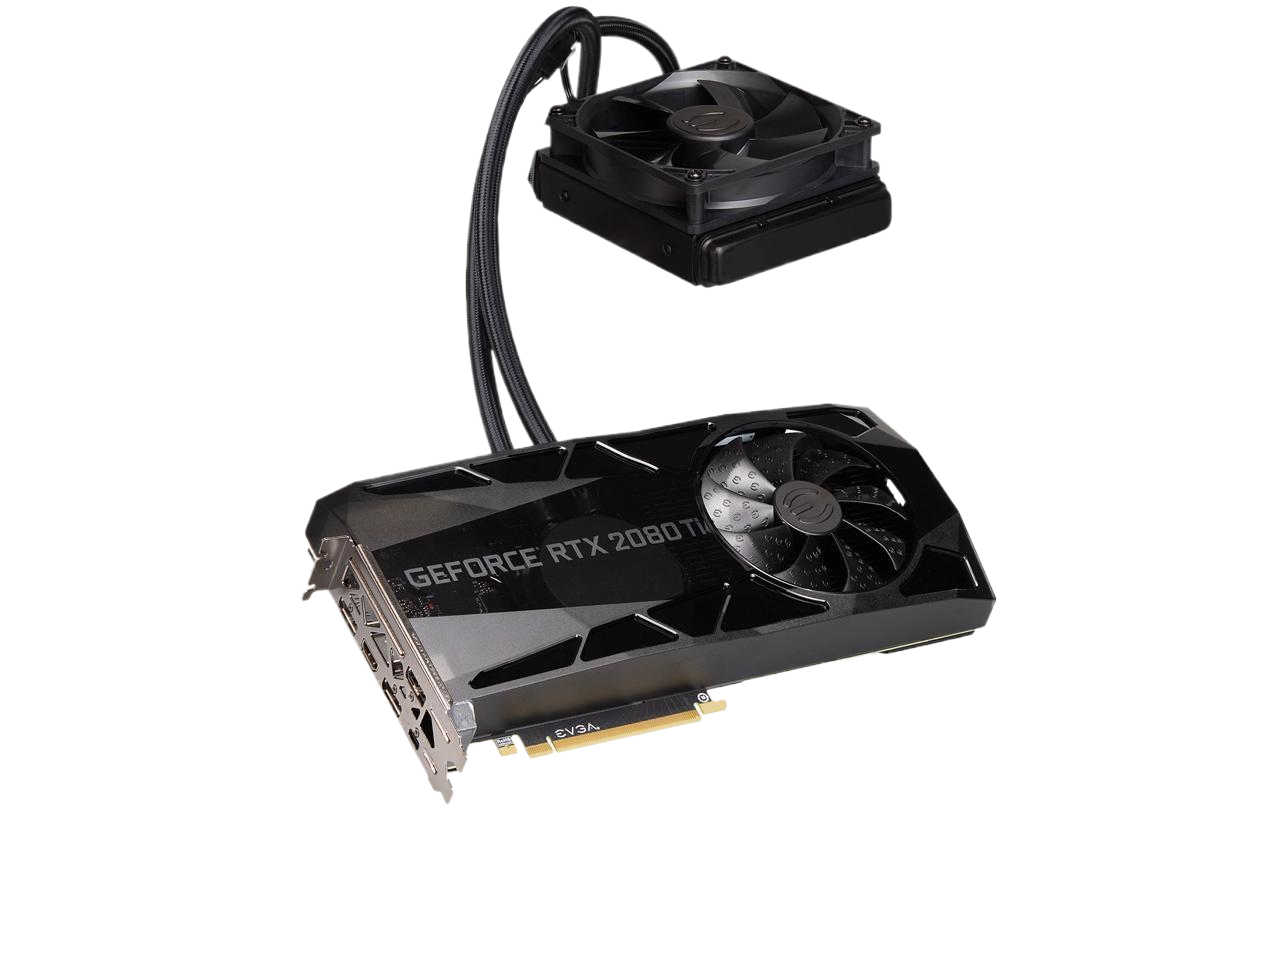 EVGA GeForce RTX 2080 TI FTW3 ULTRA HYBRID GAMING 11GB GDDR6 RGB LED & iCX2  Technology - 9 Thermal Sensors Graphics Card 11G-P4-2484-KR